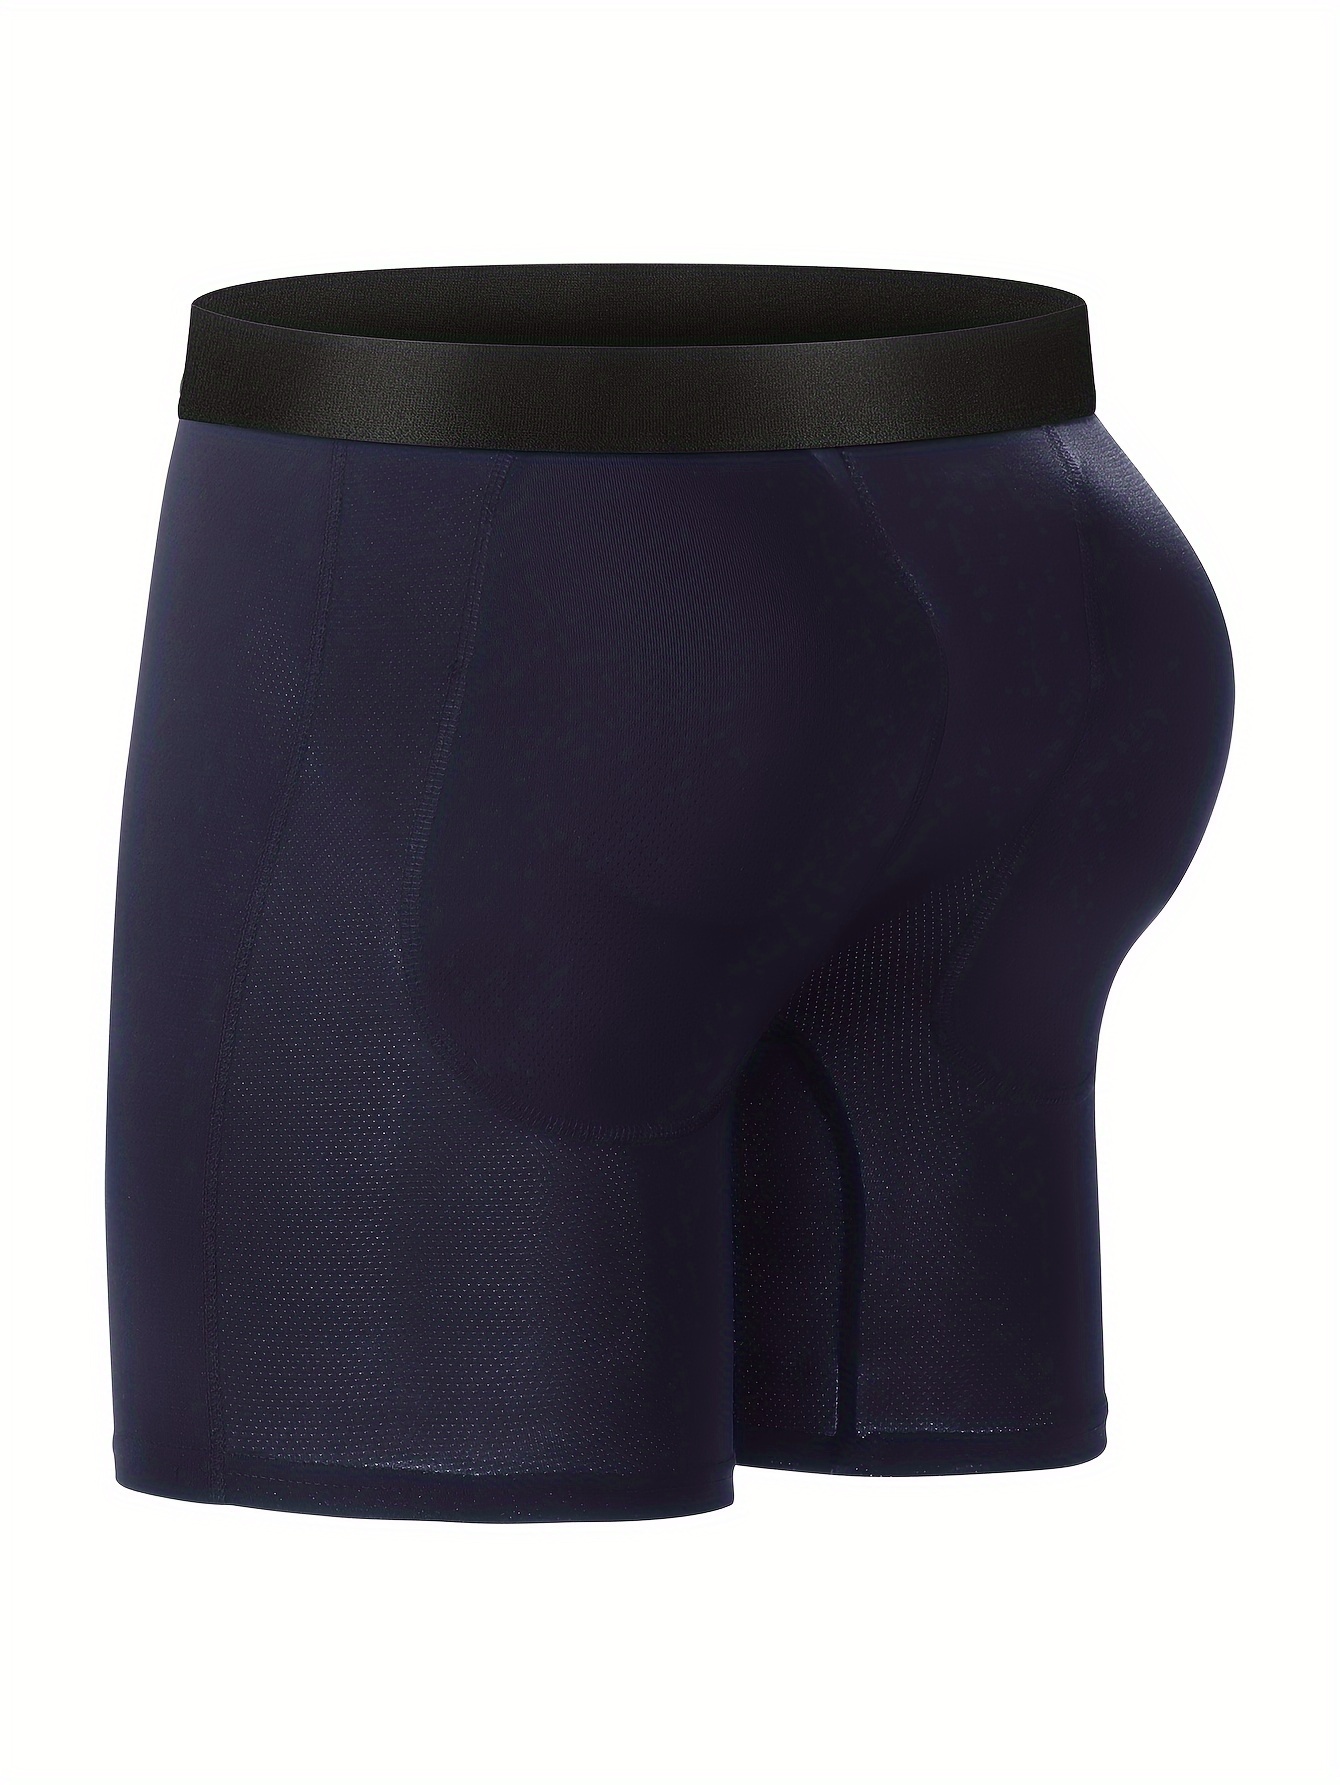 Men's Butt Lifter Shapewear Boxer Briefs with Padded Enhancing Underwear